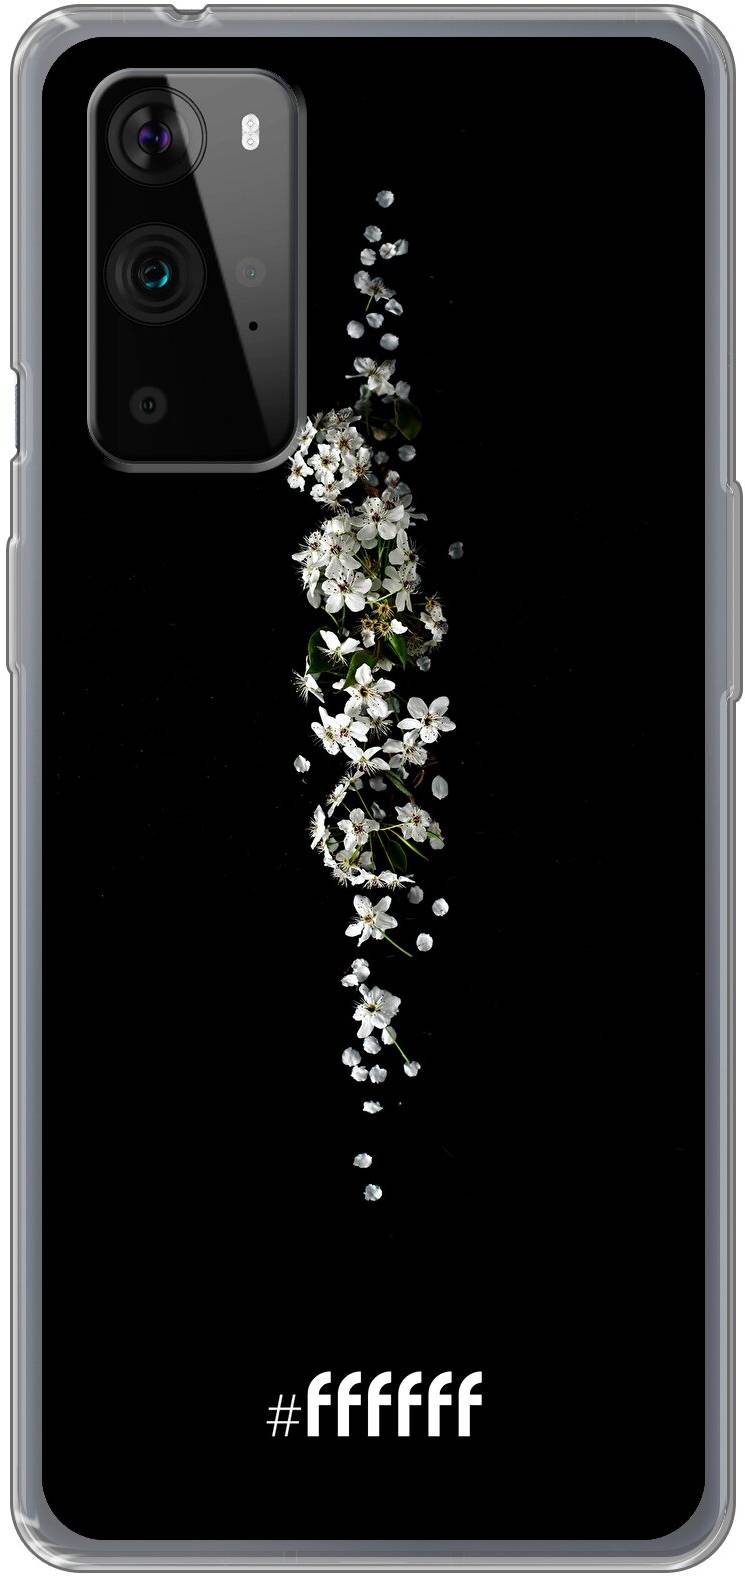 White flowers in the dark 9 Pro